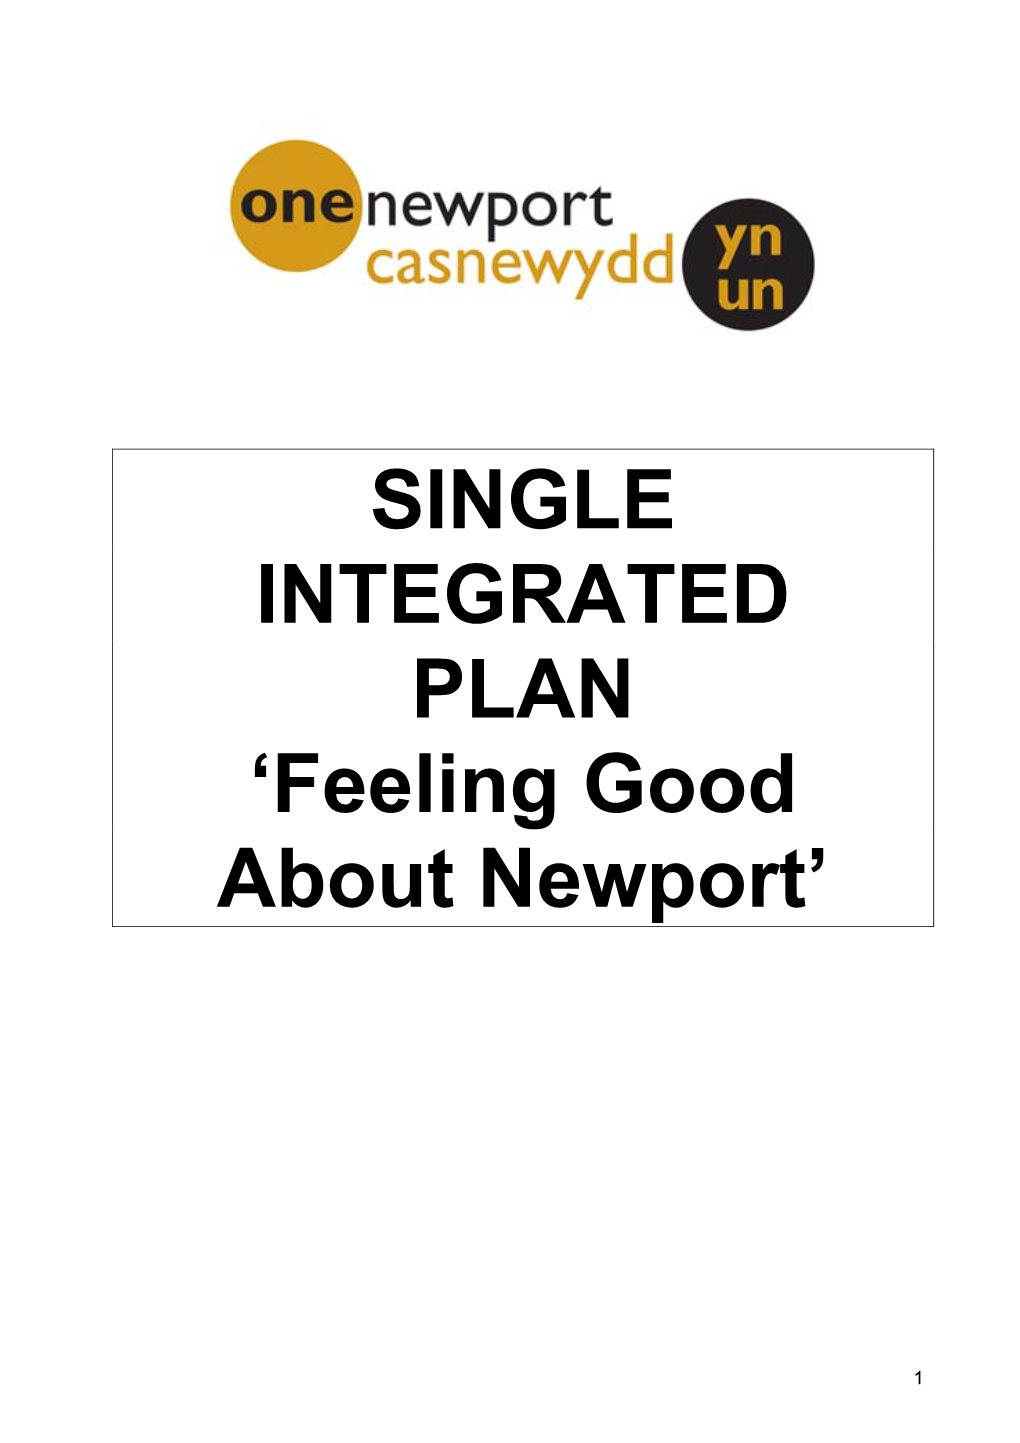 One Newport's Single Plan